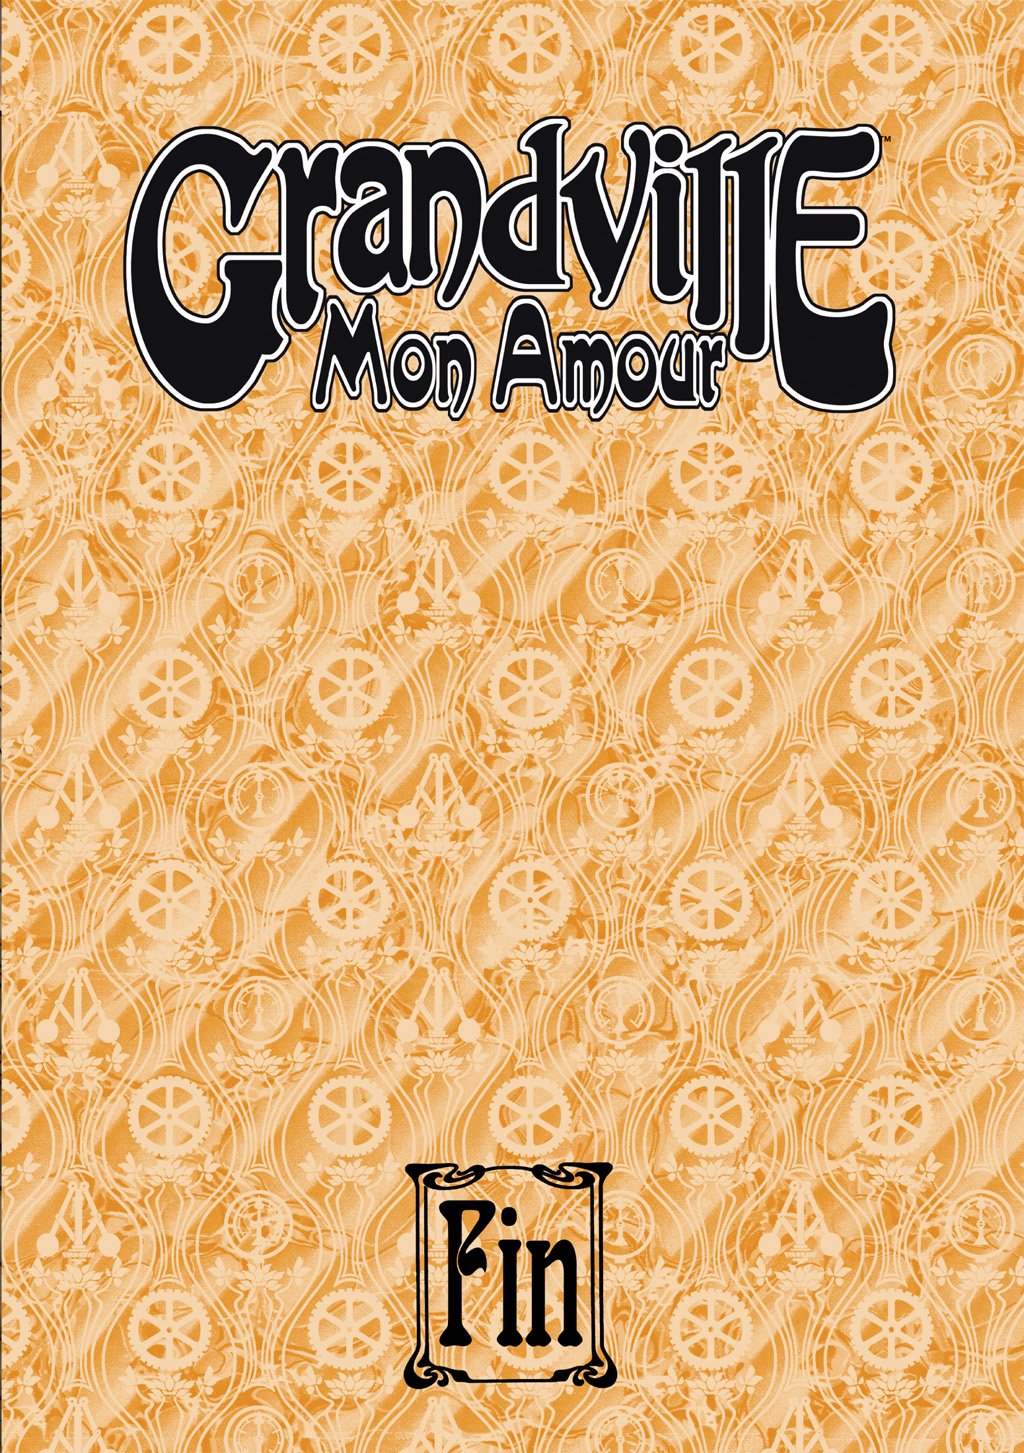 Read online Grandville comic -  Issue # Vol. 2 Mon Amour - 100